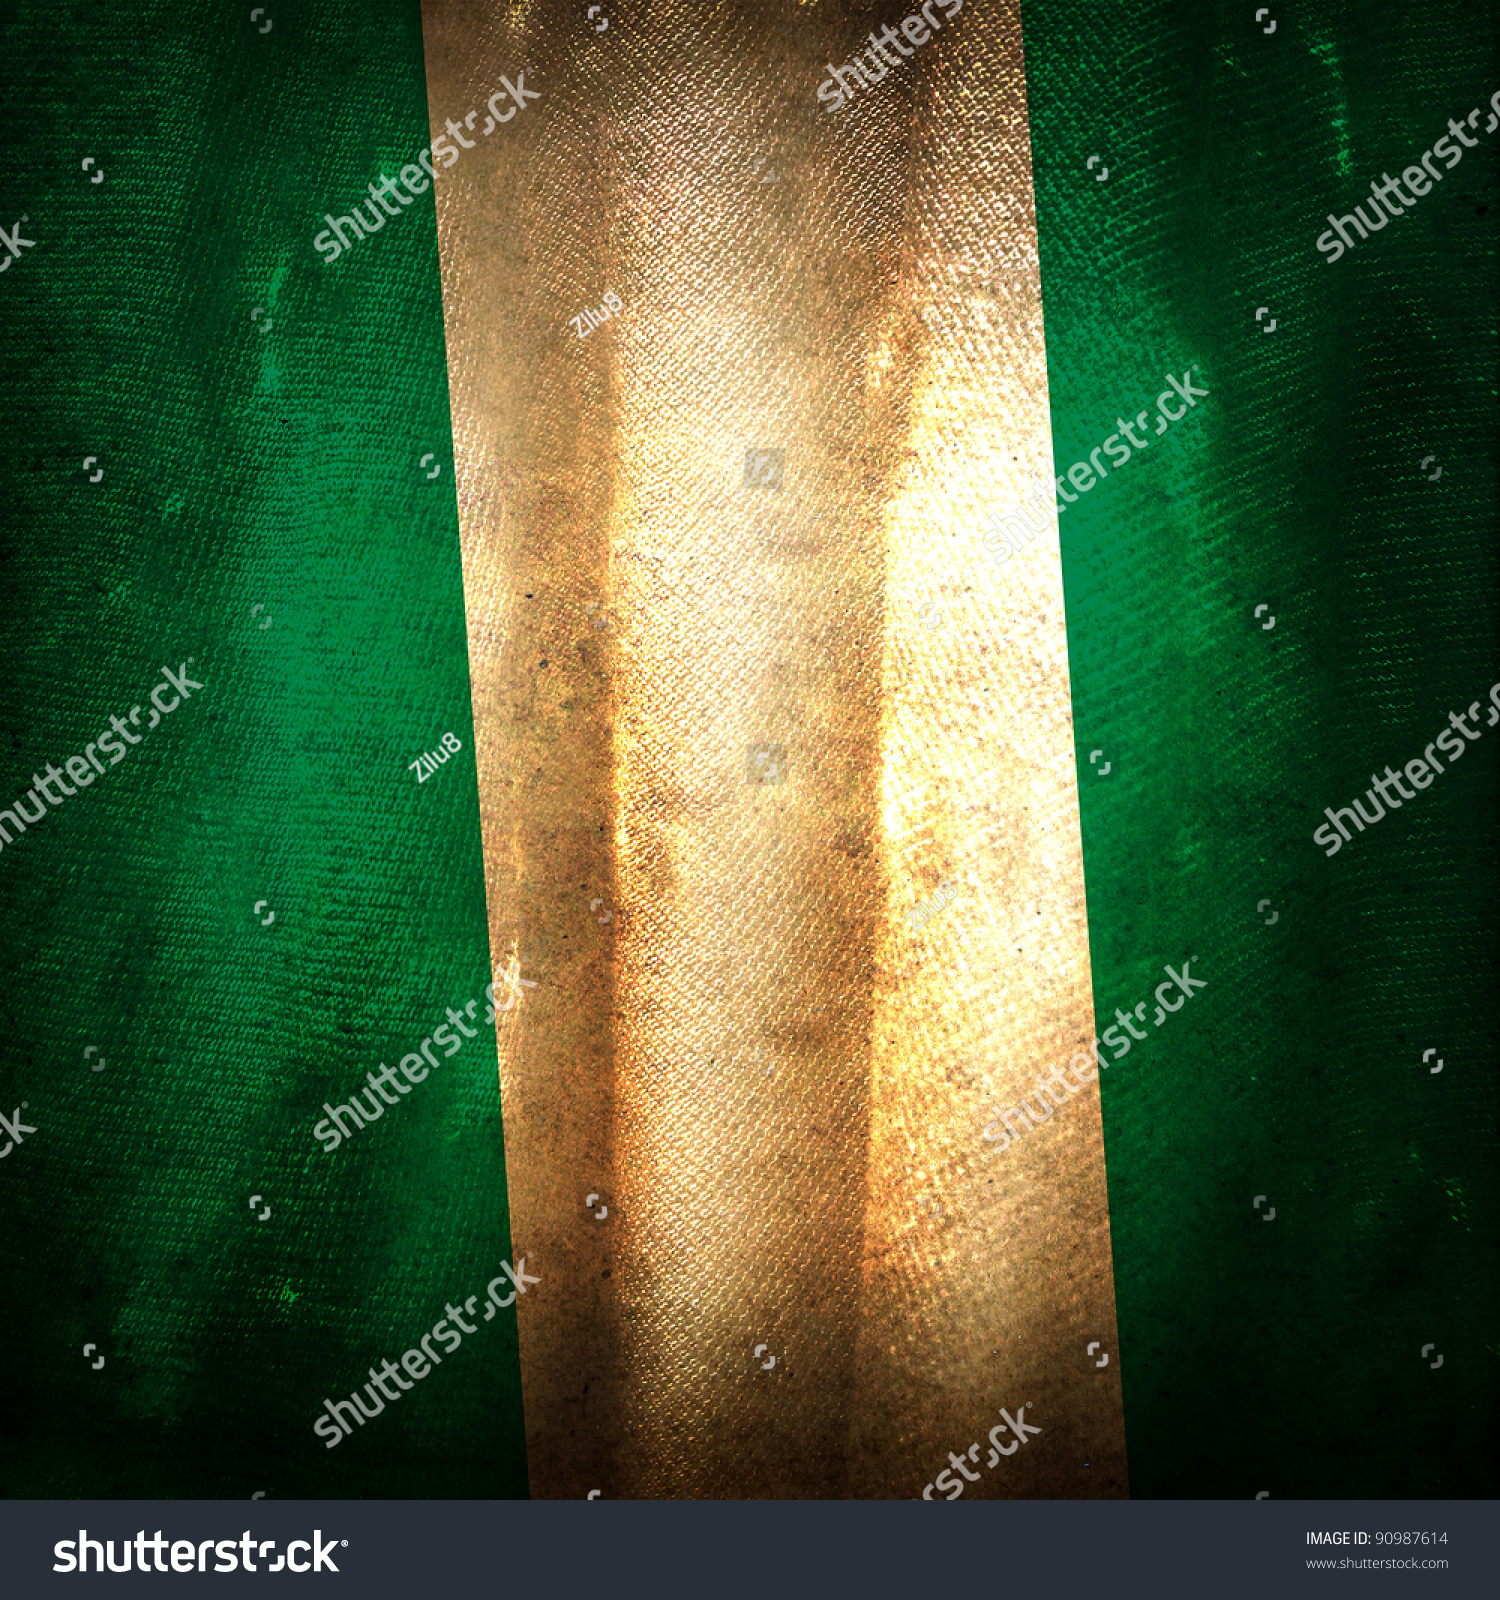 Old Grunge Flag Nigeria Stock Photo 90987614 - Shutterstock